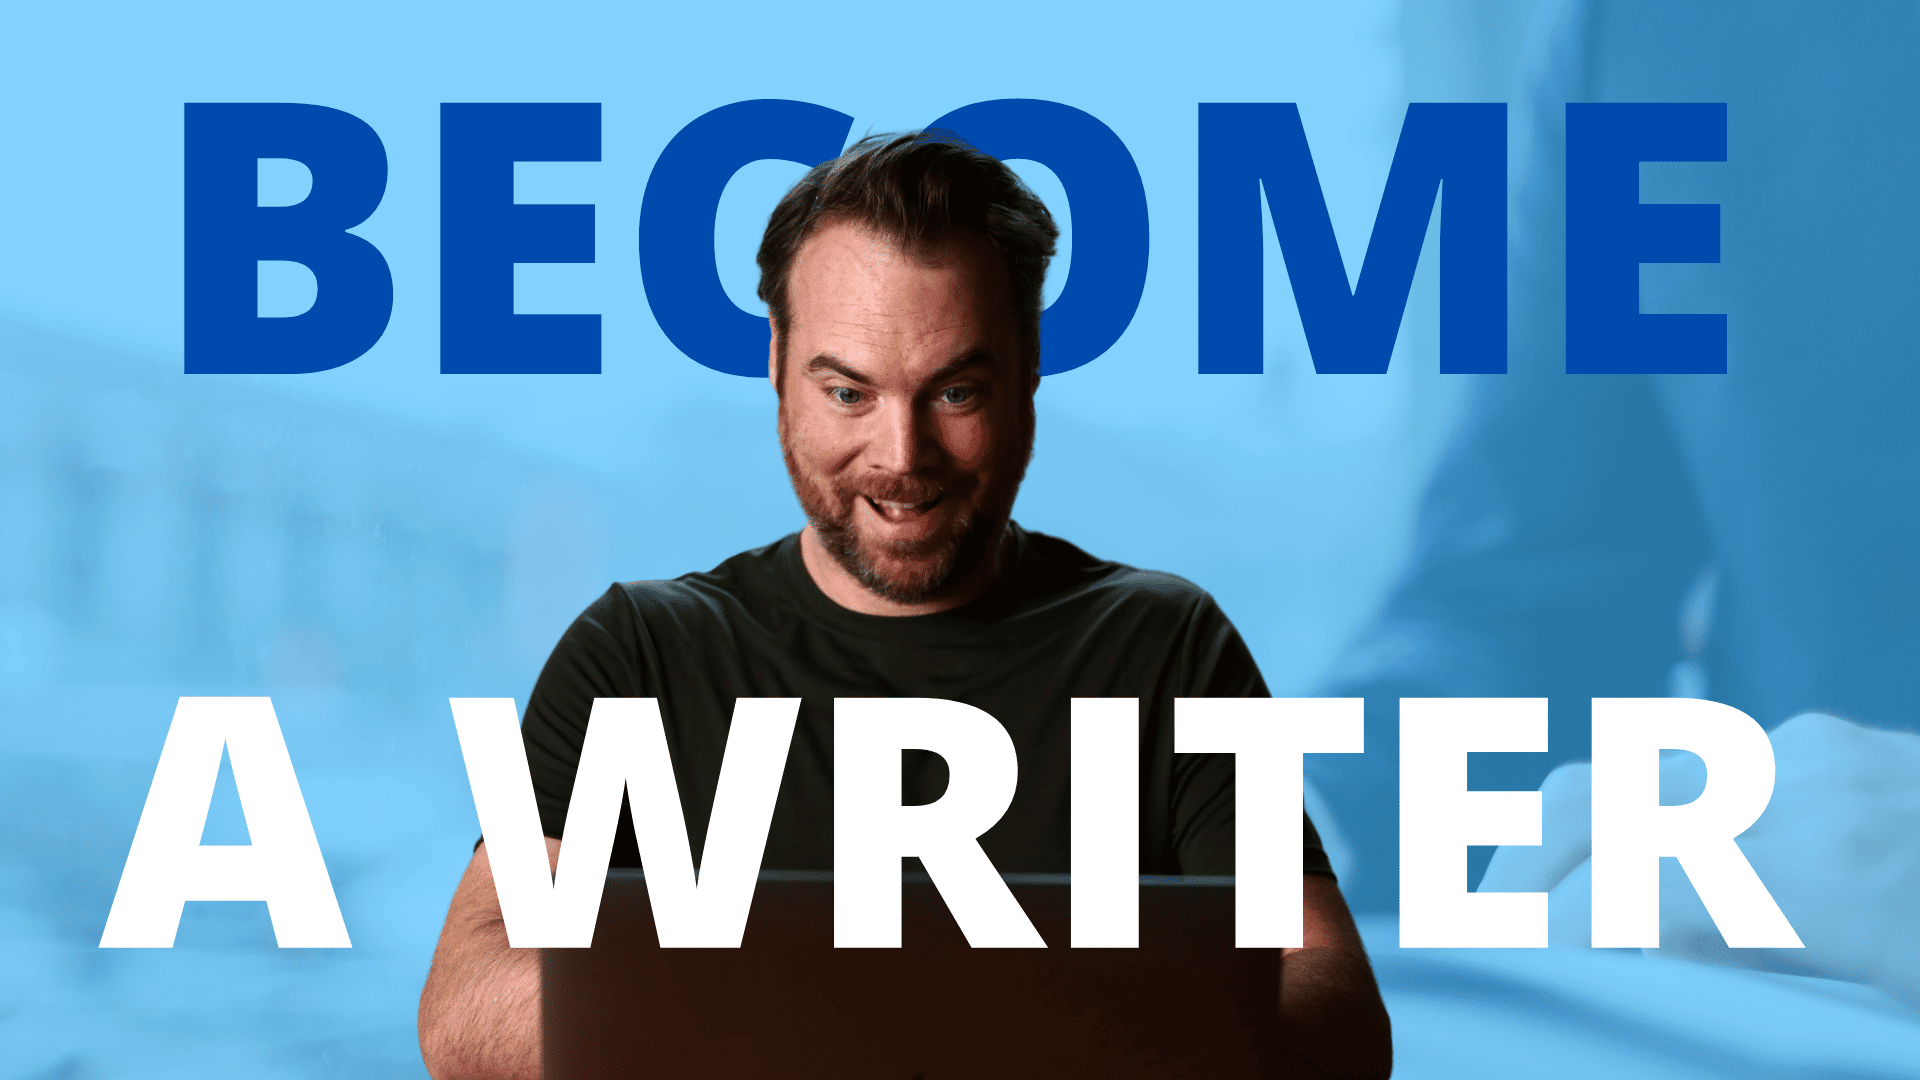 essaypro become a writer